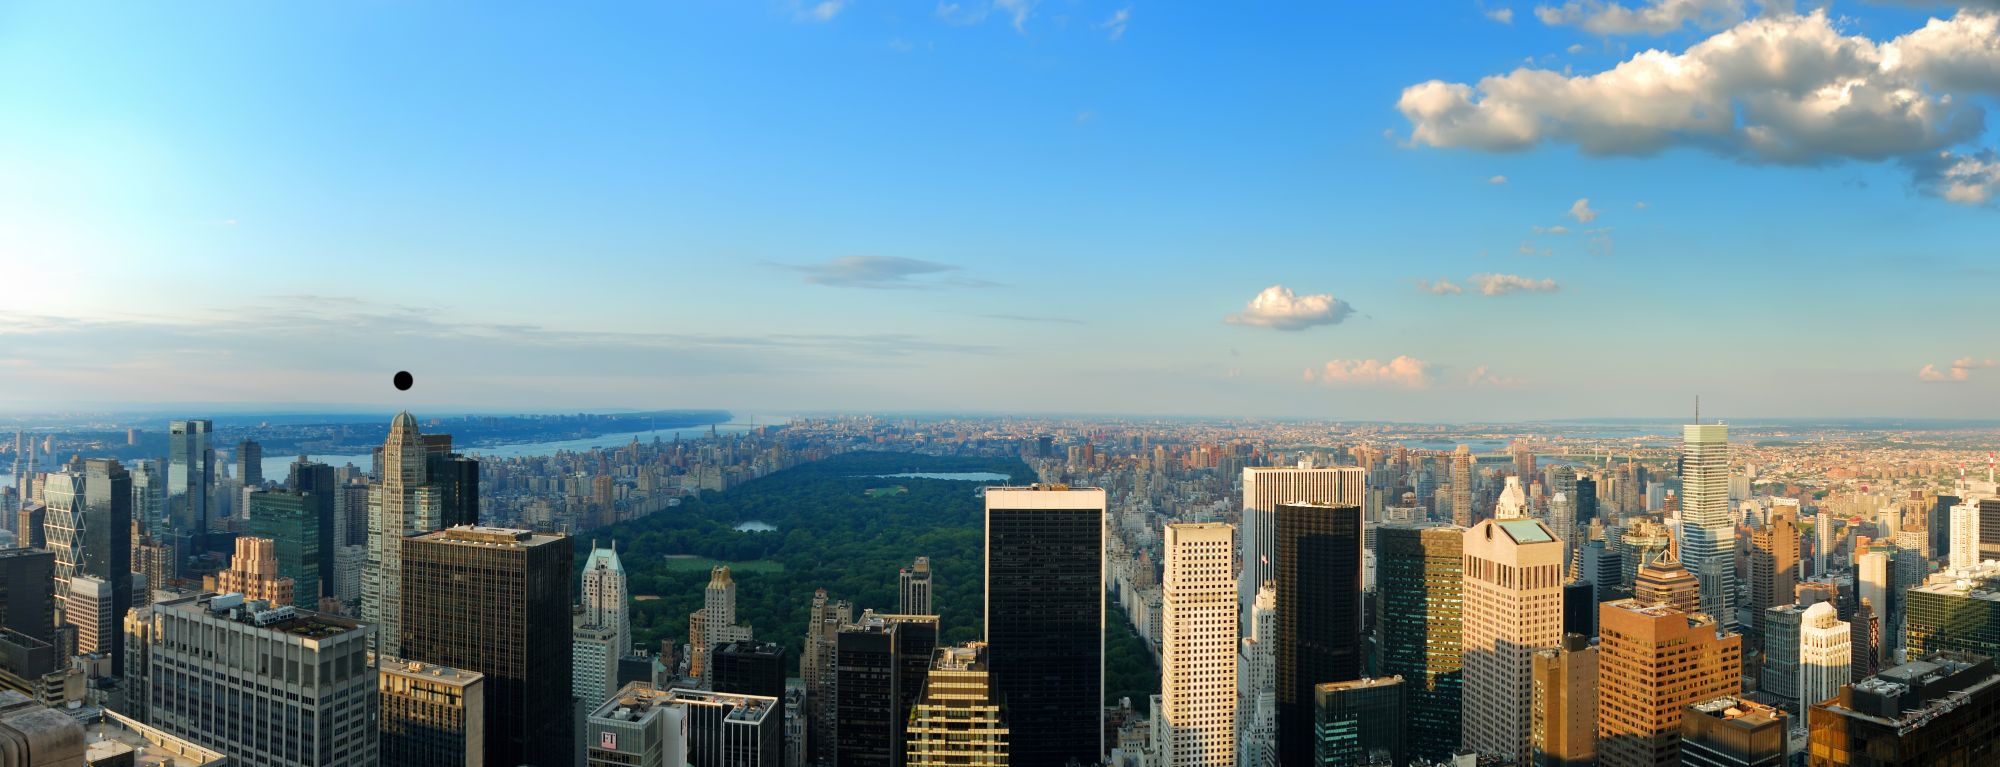 new-york-city-panorama ID'd.jpg